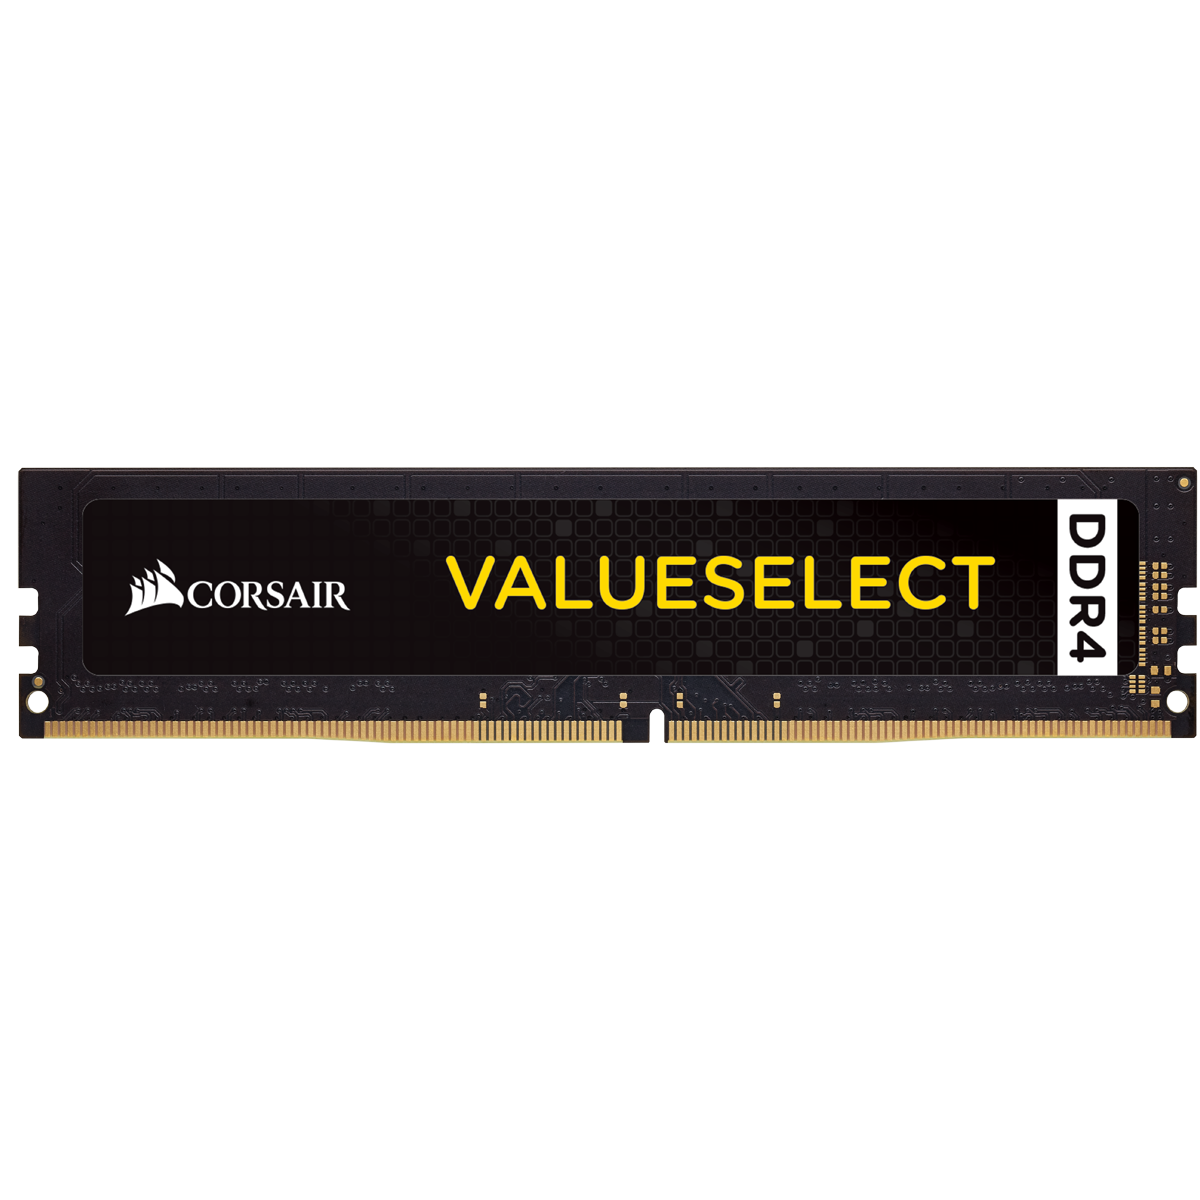 CORSAIR - Corsair Value Select 16GB (1x16GB) DDR4 PC4-19200C14 2400MHz Single Channel